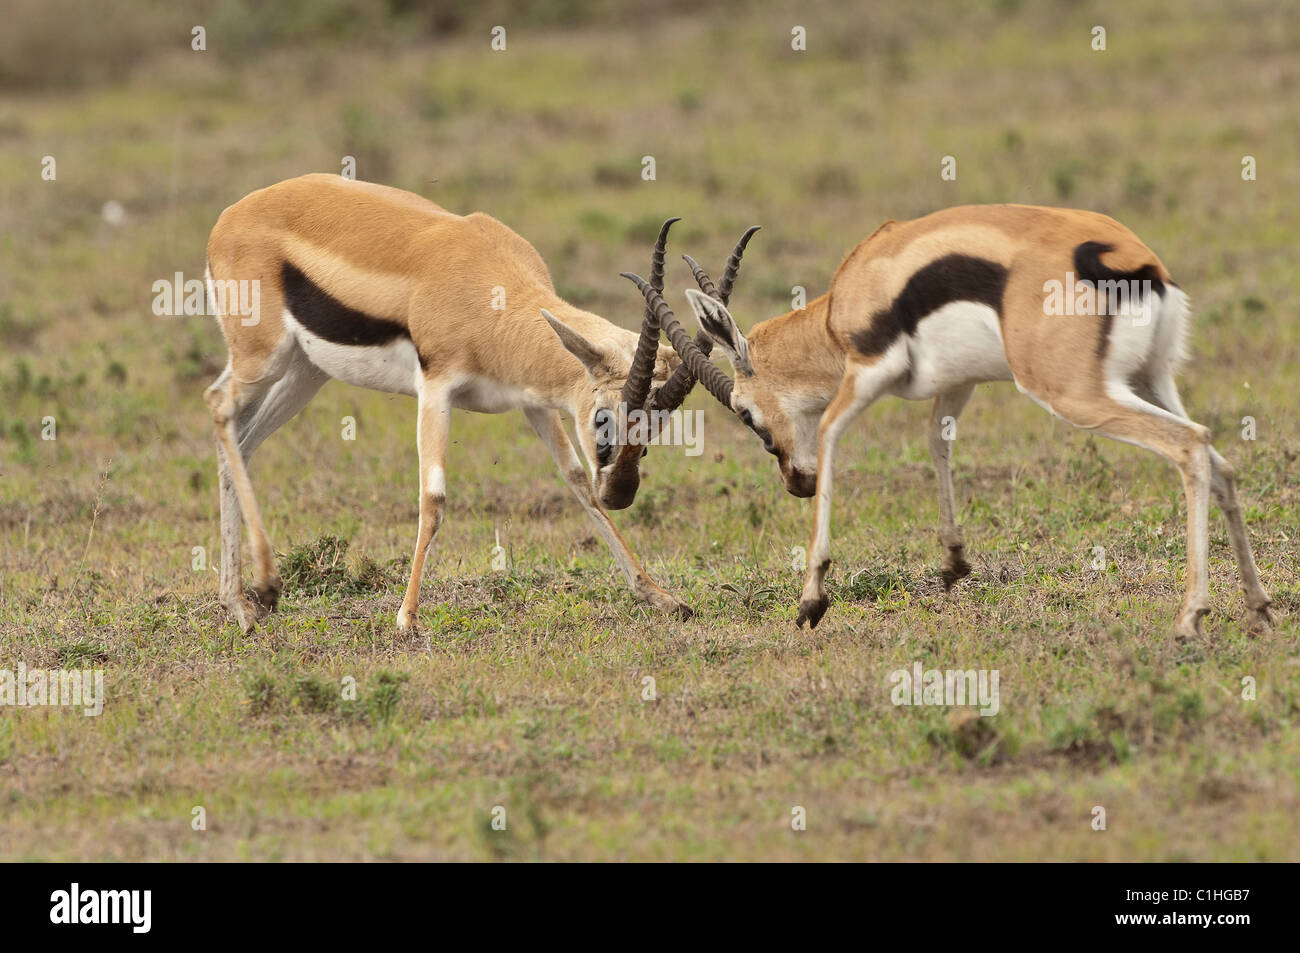 Stock photo of two male thomson's gazelles sparring. Stock Photo